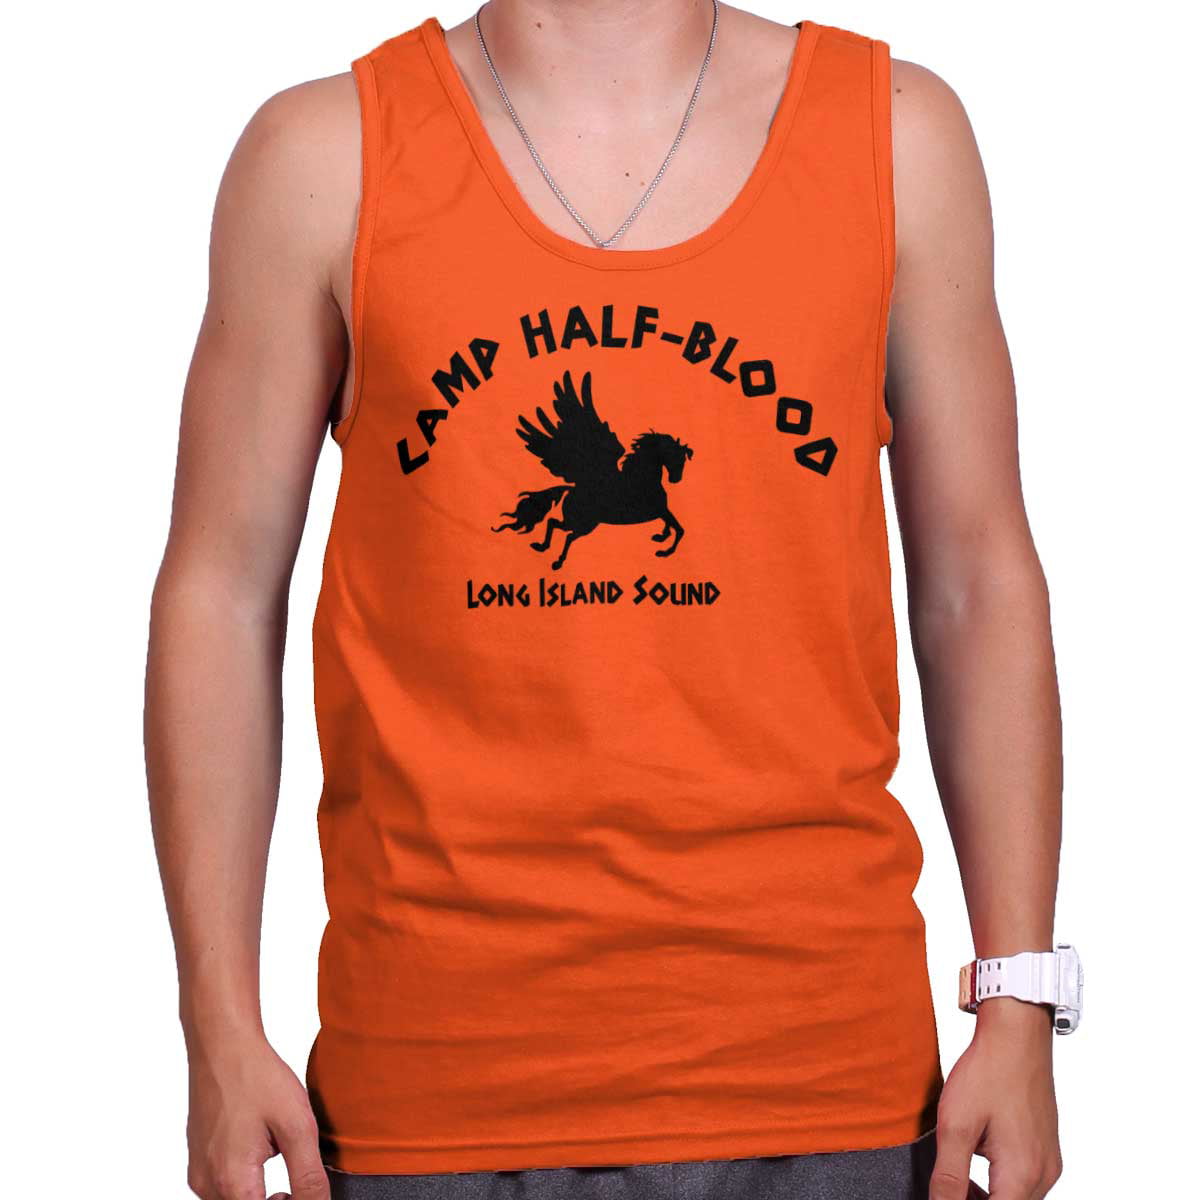 Camp Half Blood Funny Book T-Shirt Womens , Ladies Girls T-shirt